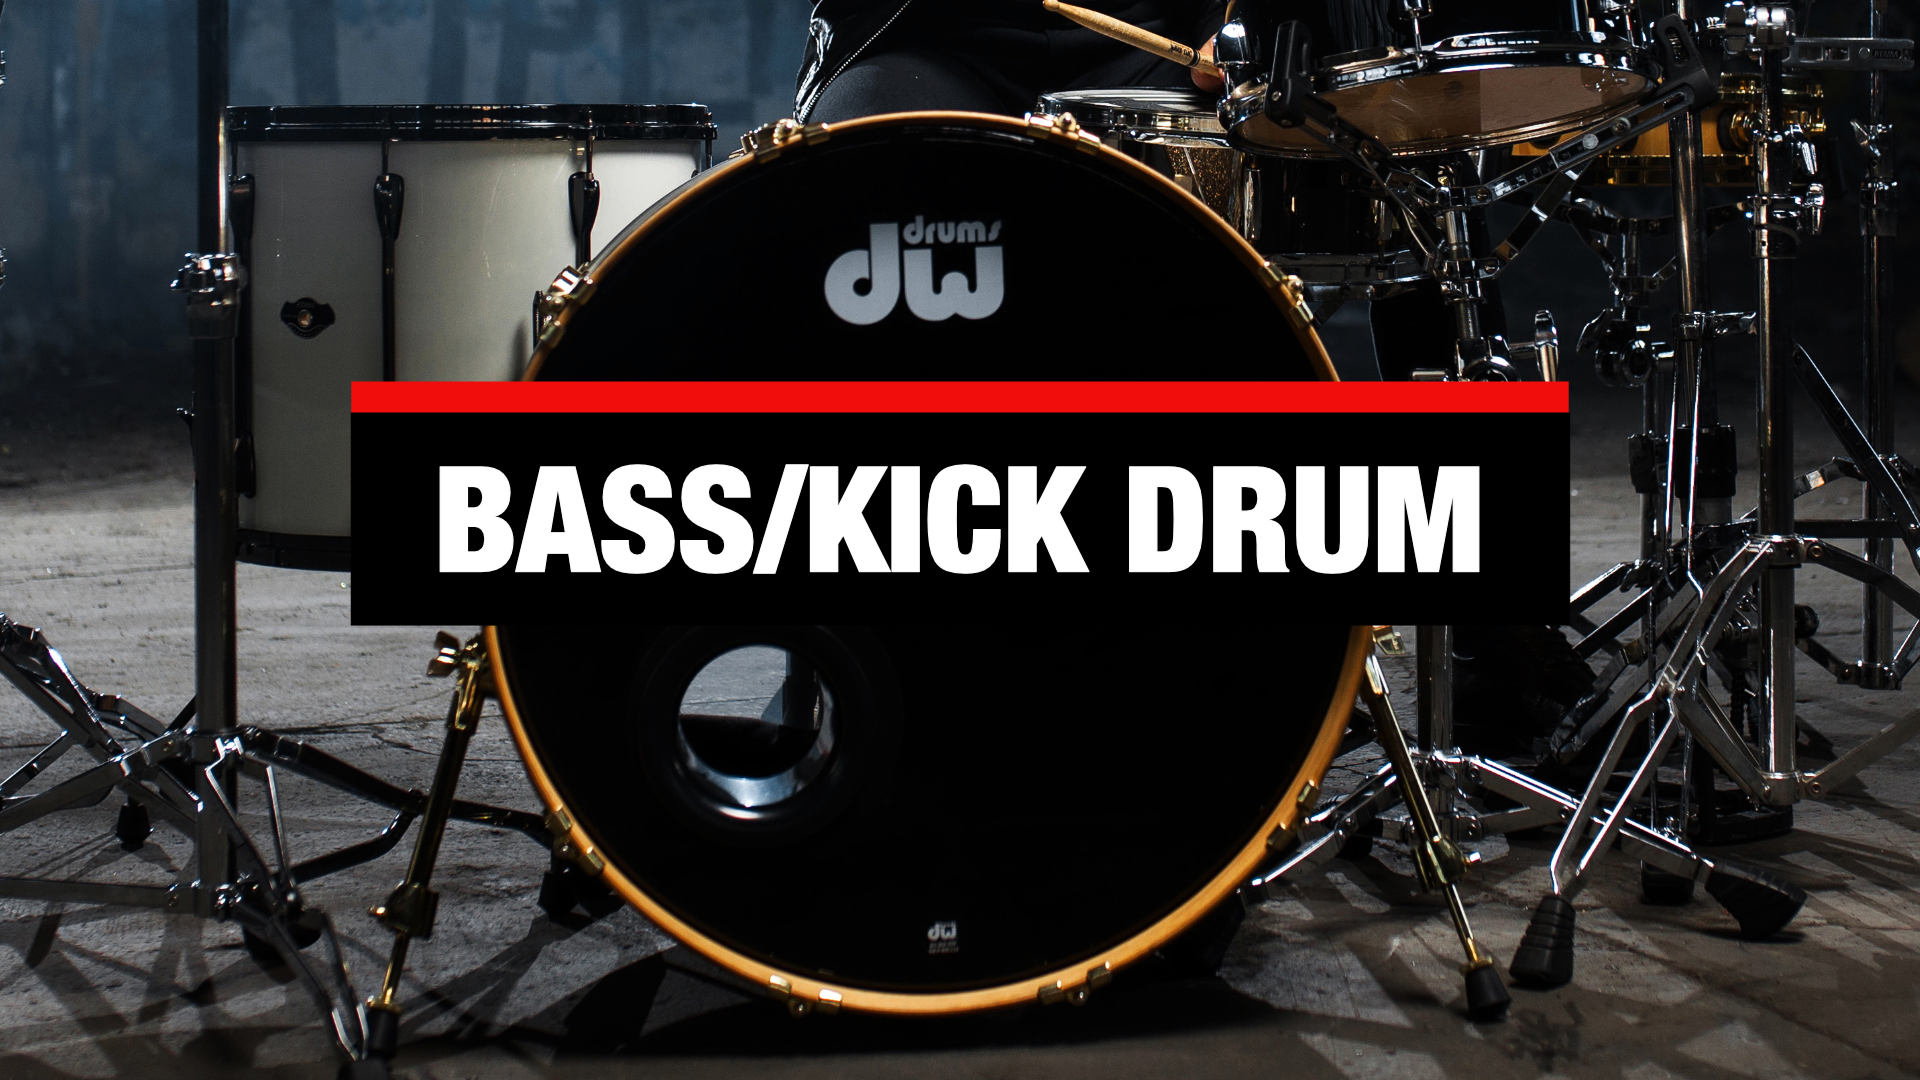 808 bass drum kit